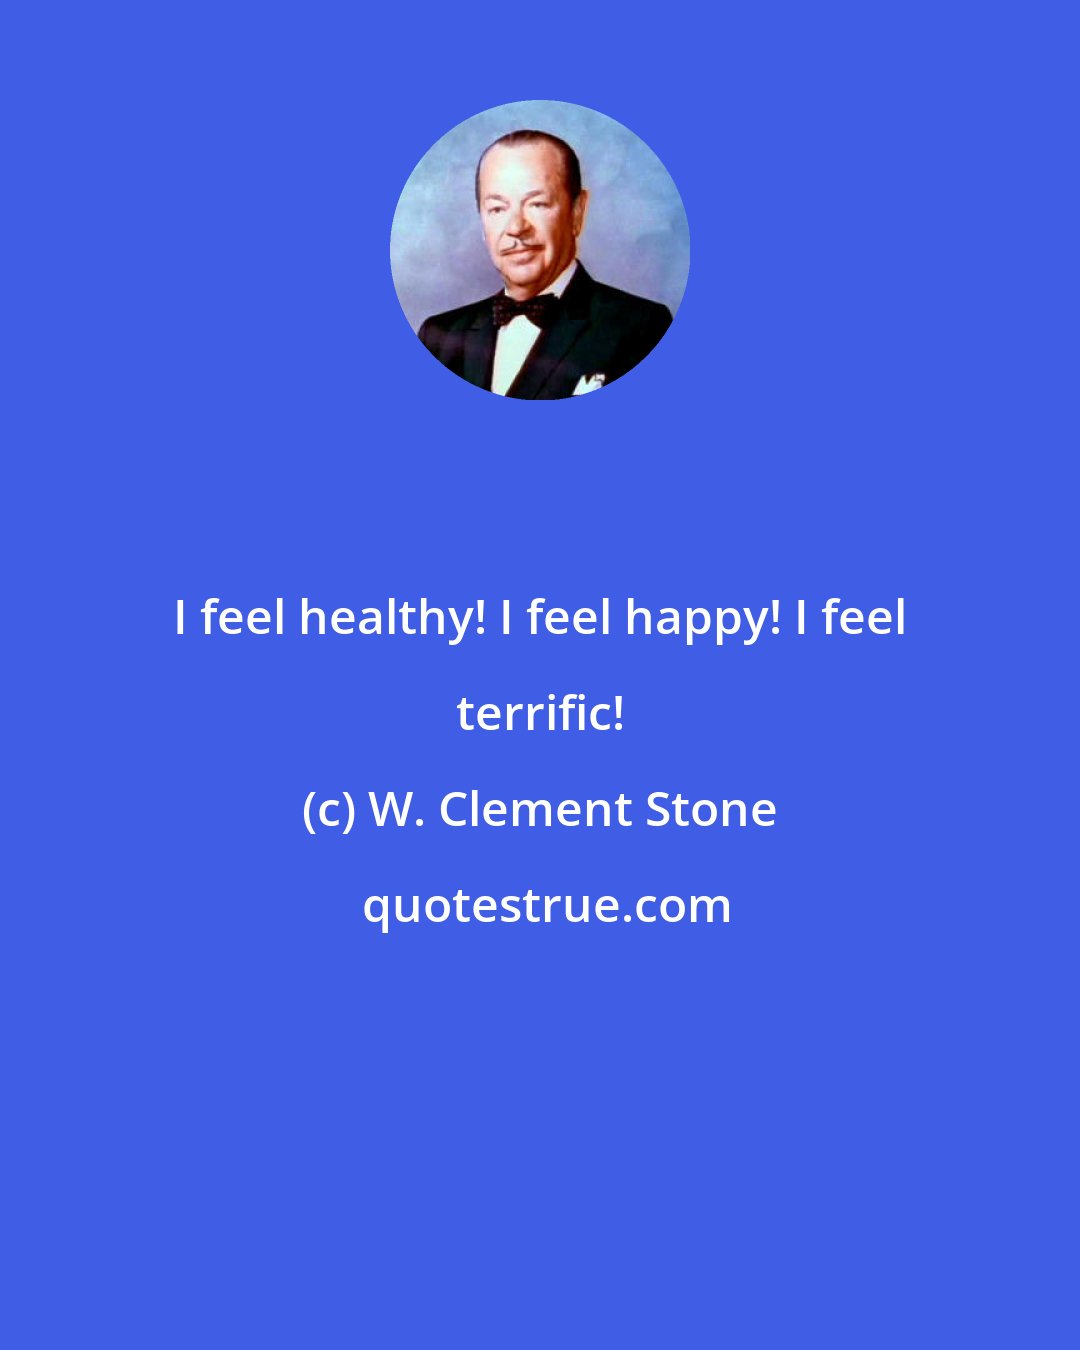 W. Clement Stone: I feel healthy! I feel happy! I feel terrific!